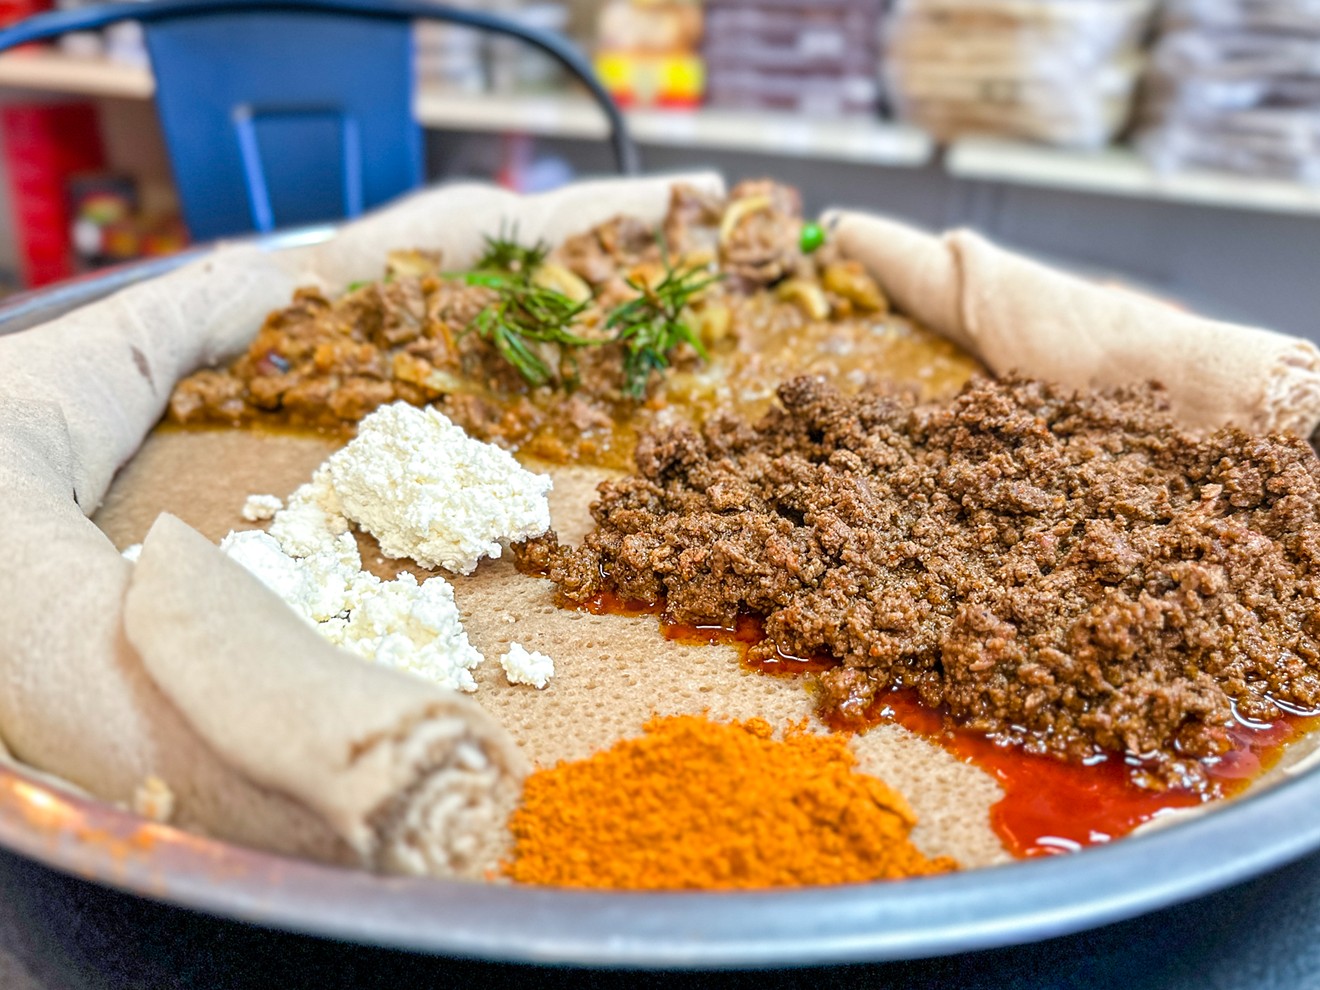 Lamb tibse and beef kitfo share a platter with injera and house-made cheese at Agoza Kitchen.